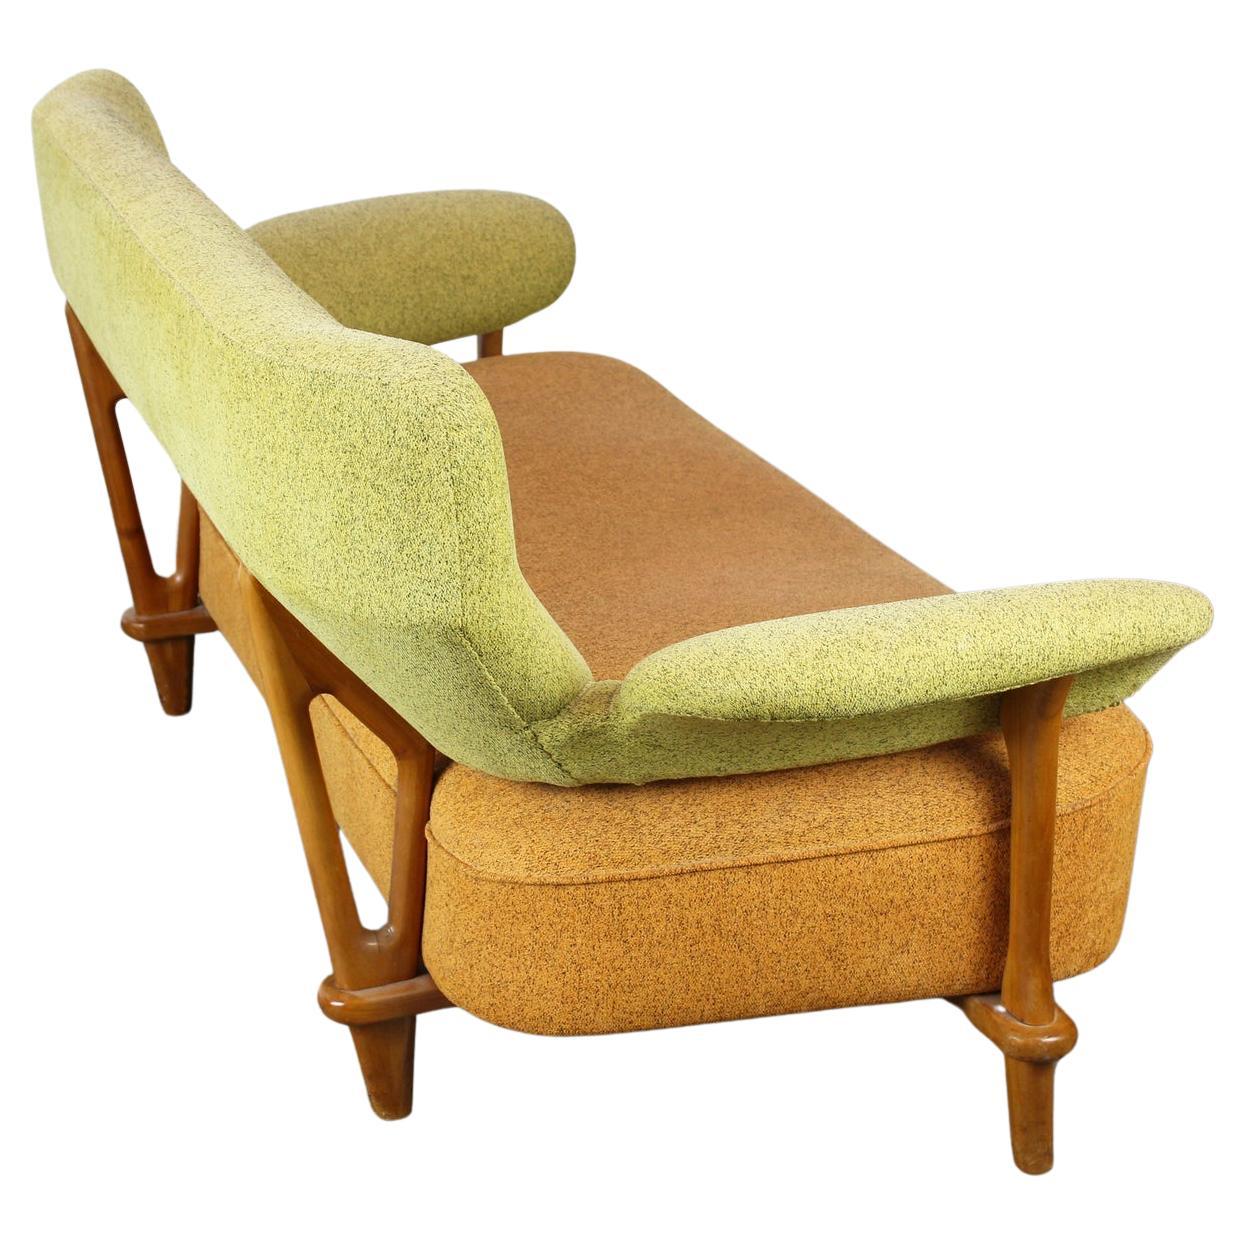 Rare Dutch Design sofa by Theo Ruth F109 for Artifort 1950 Mid-Century Modern